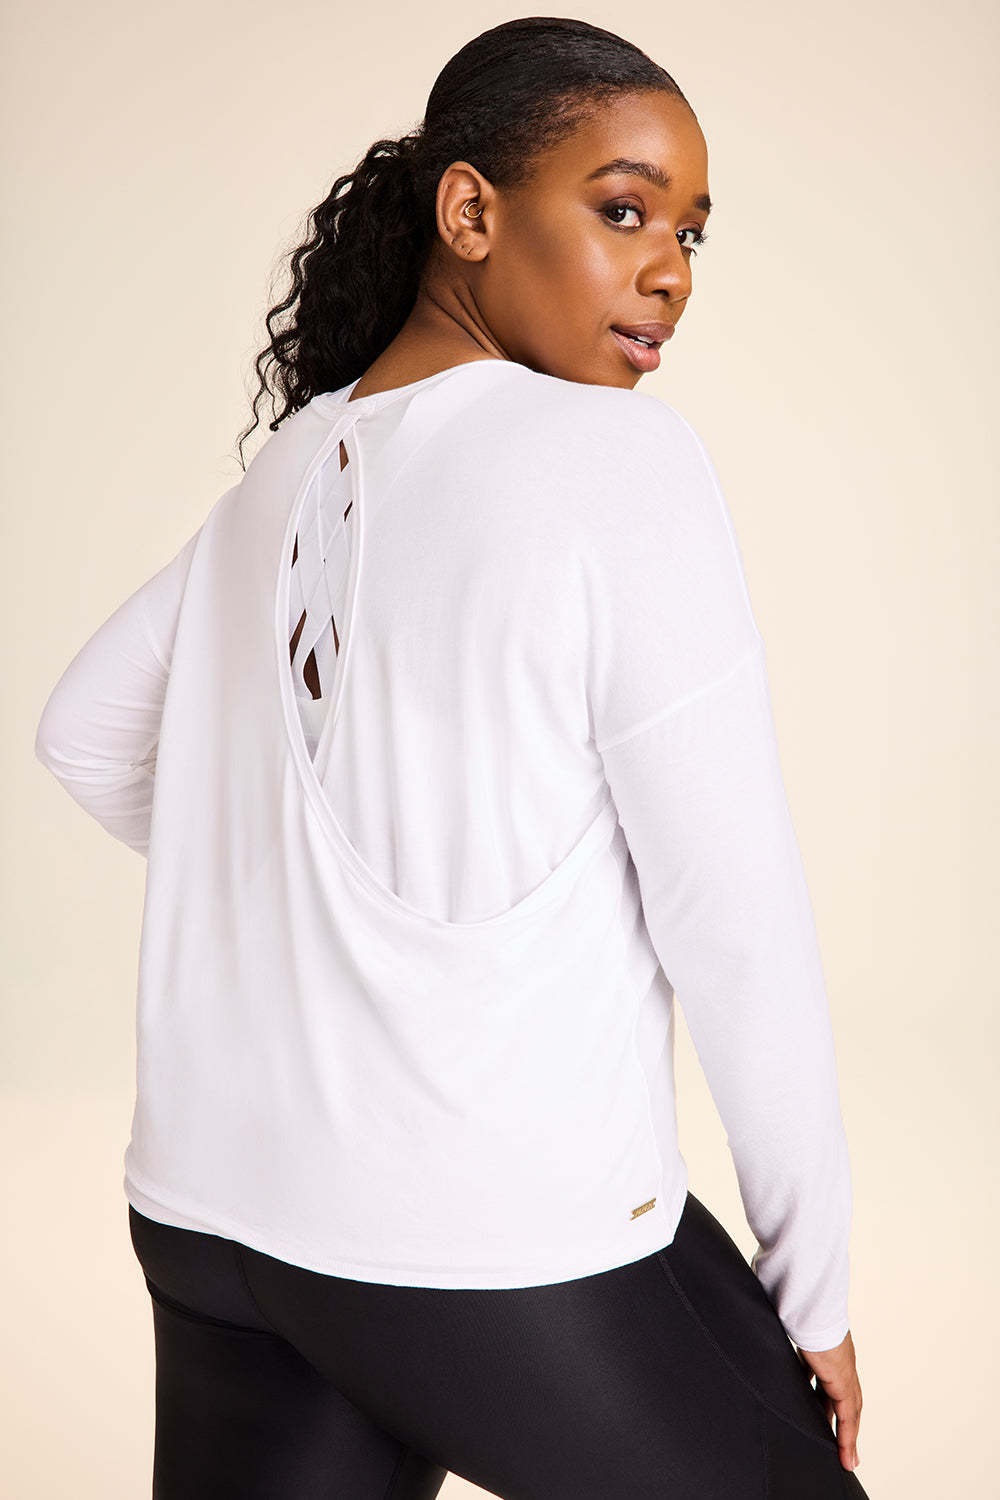 BALEAF Women's Long Sleeve Open Back Workout Yoga Top Shirts White Size M